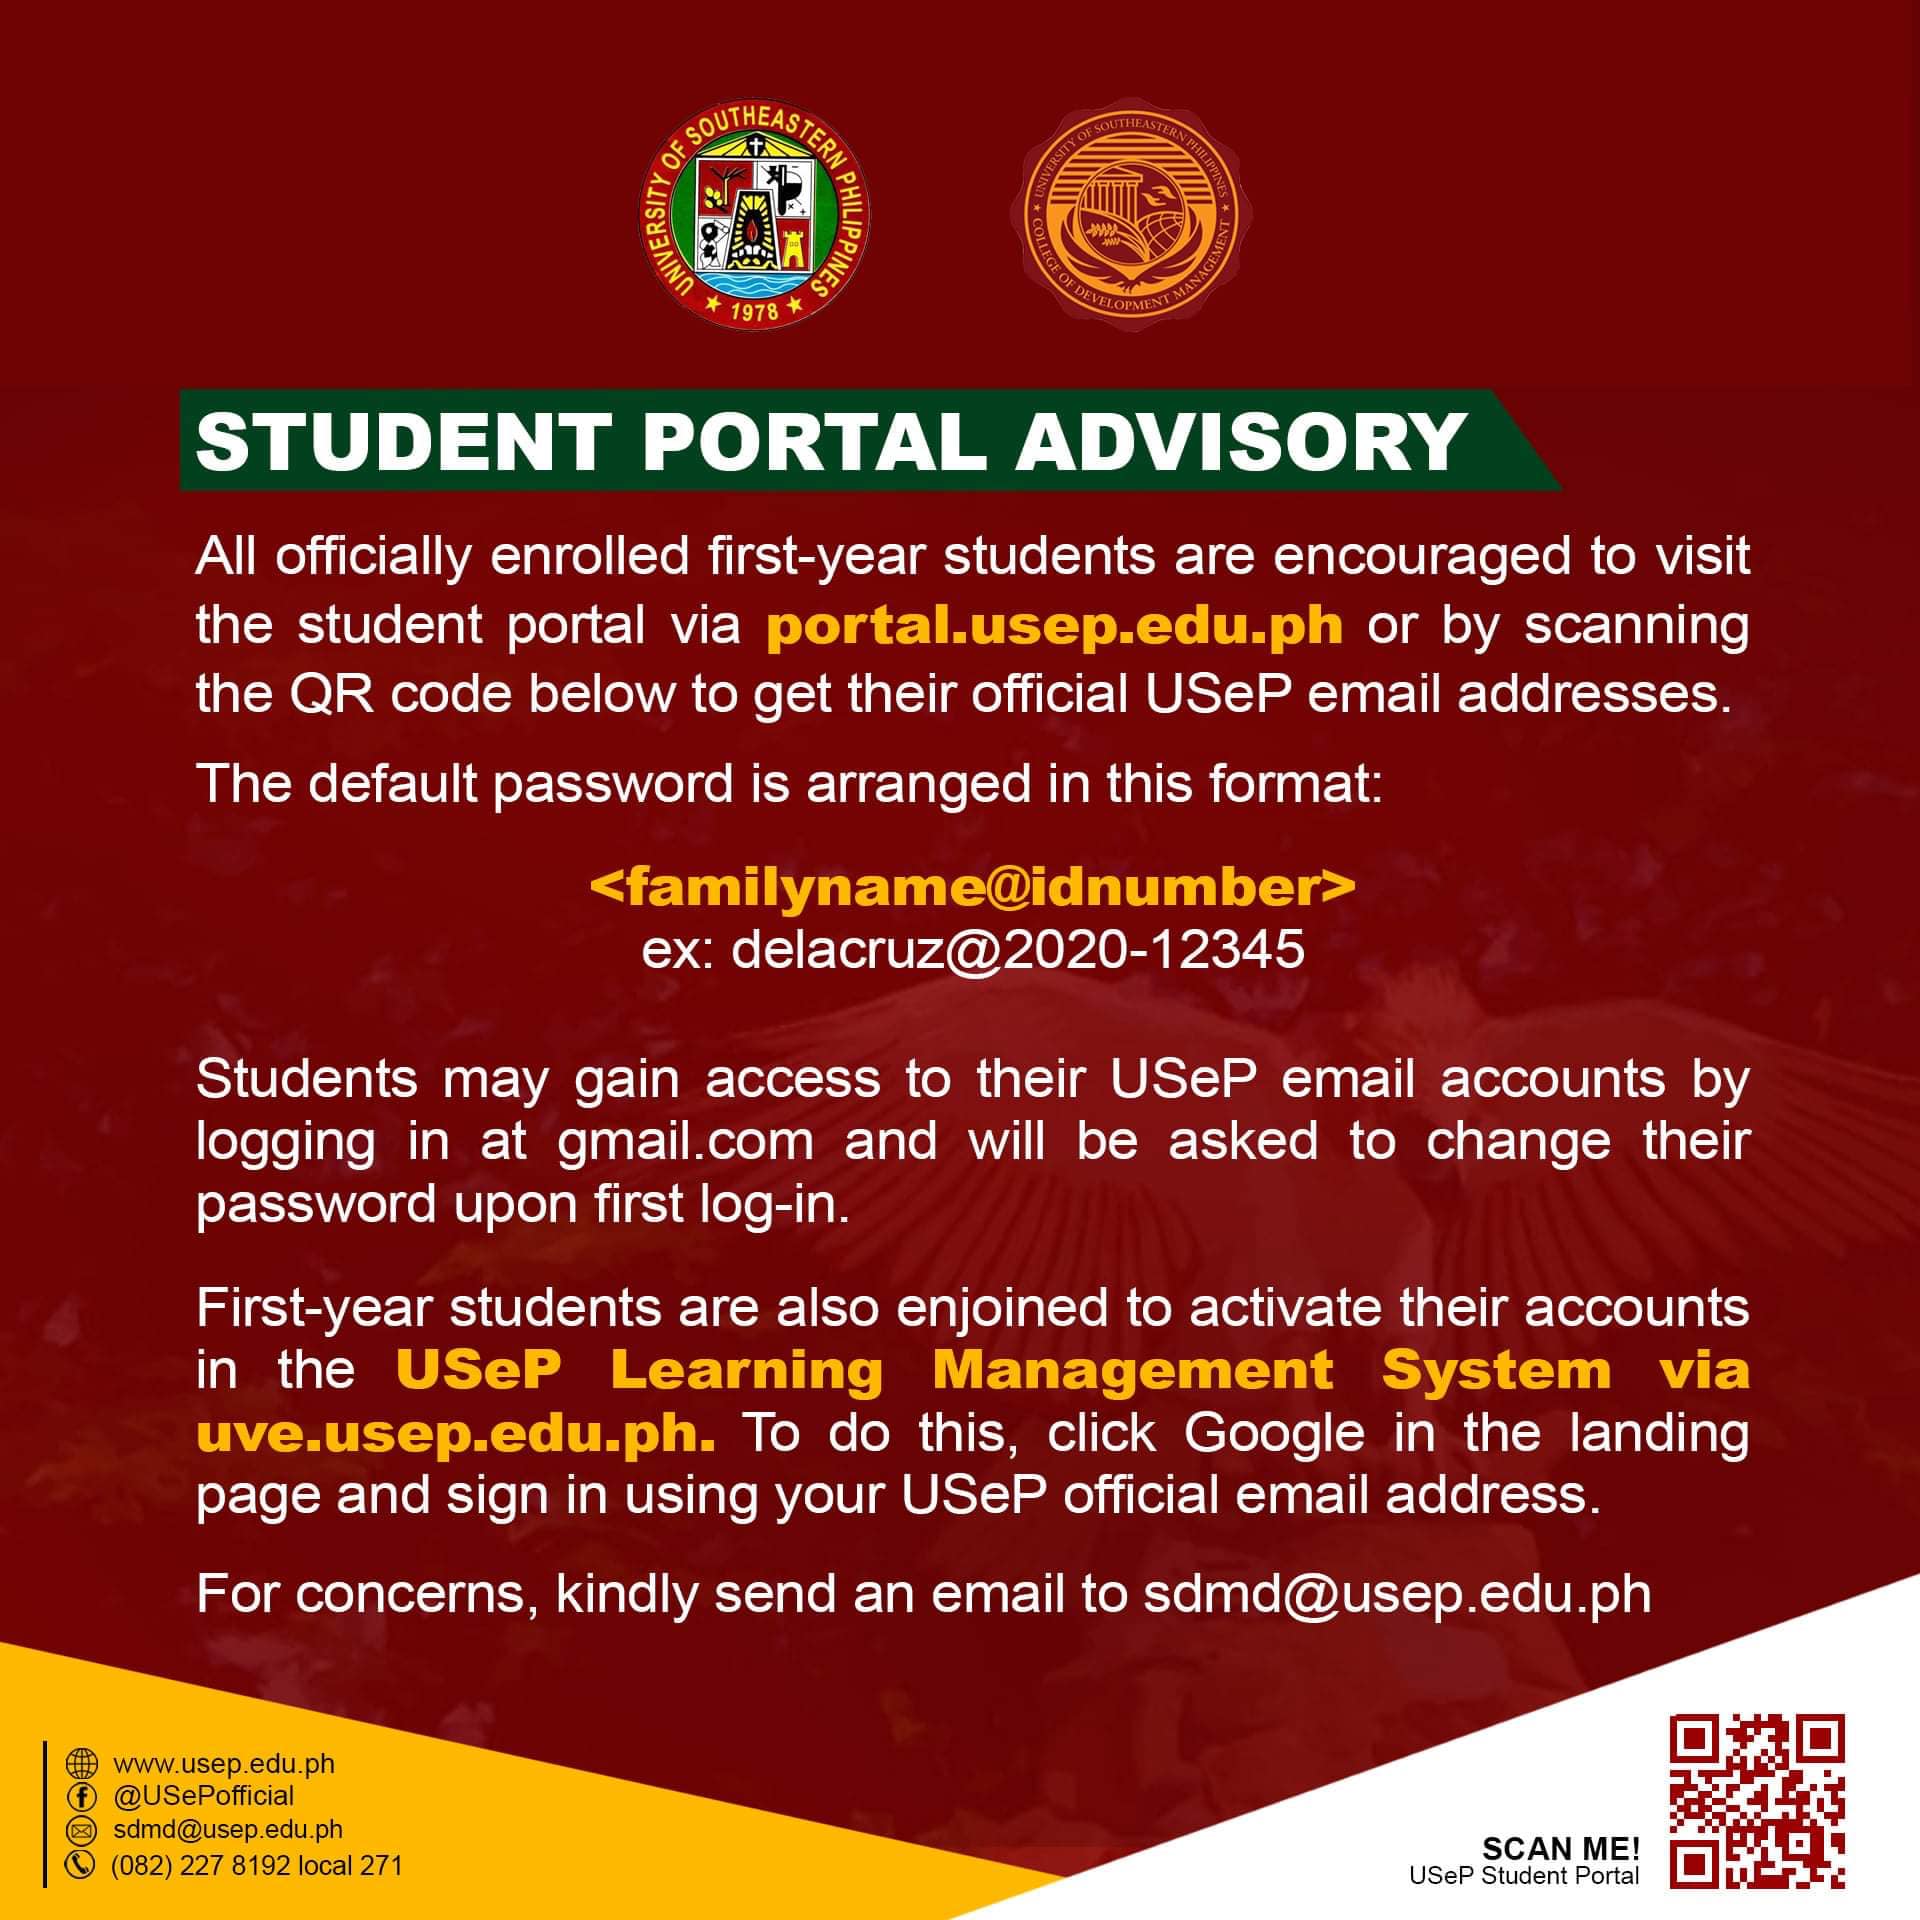 Student Portal Advisory